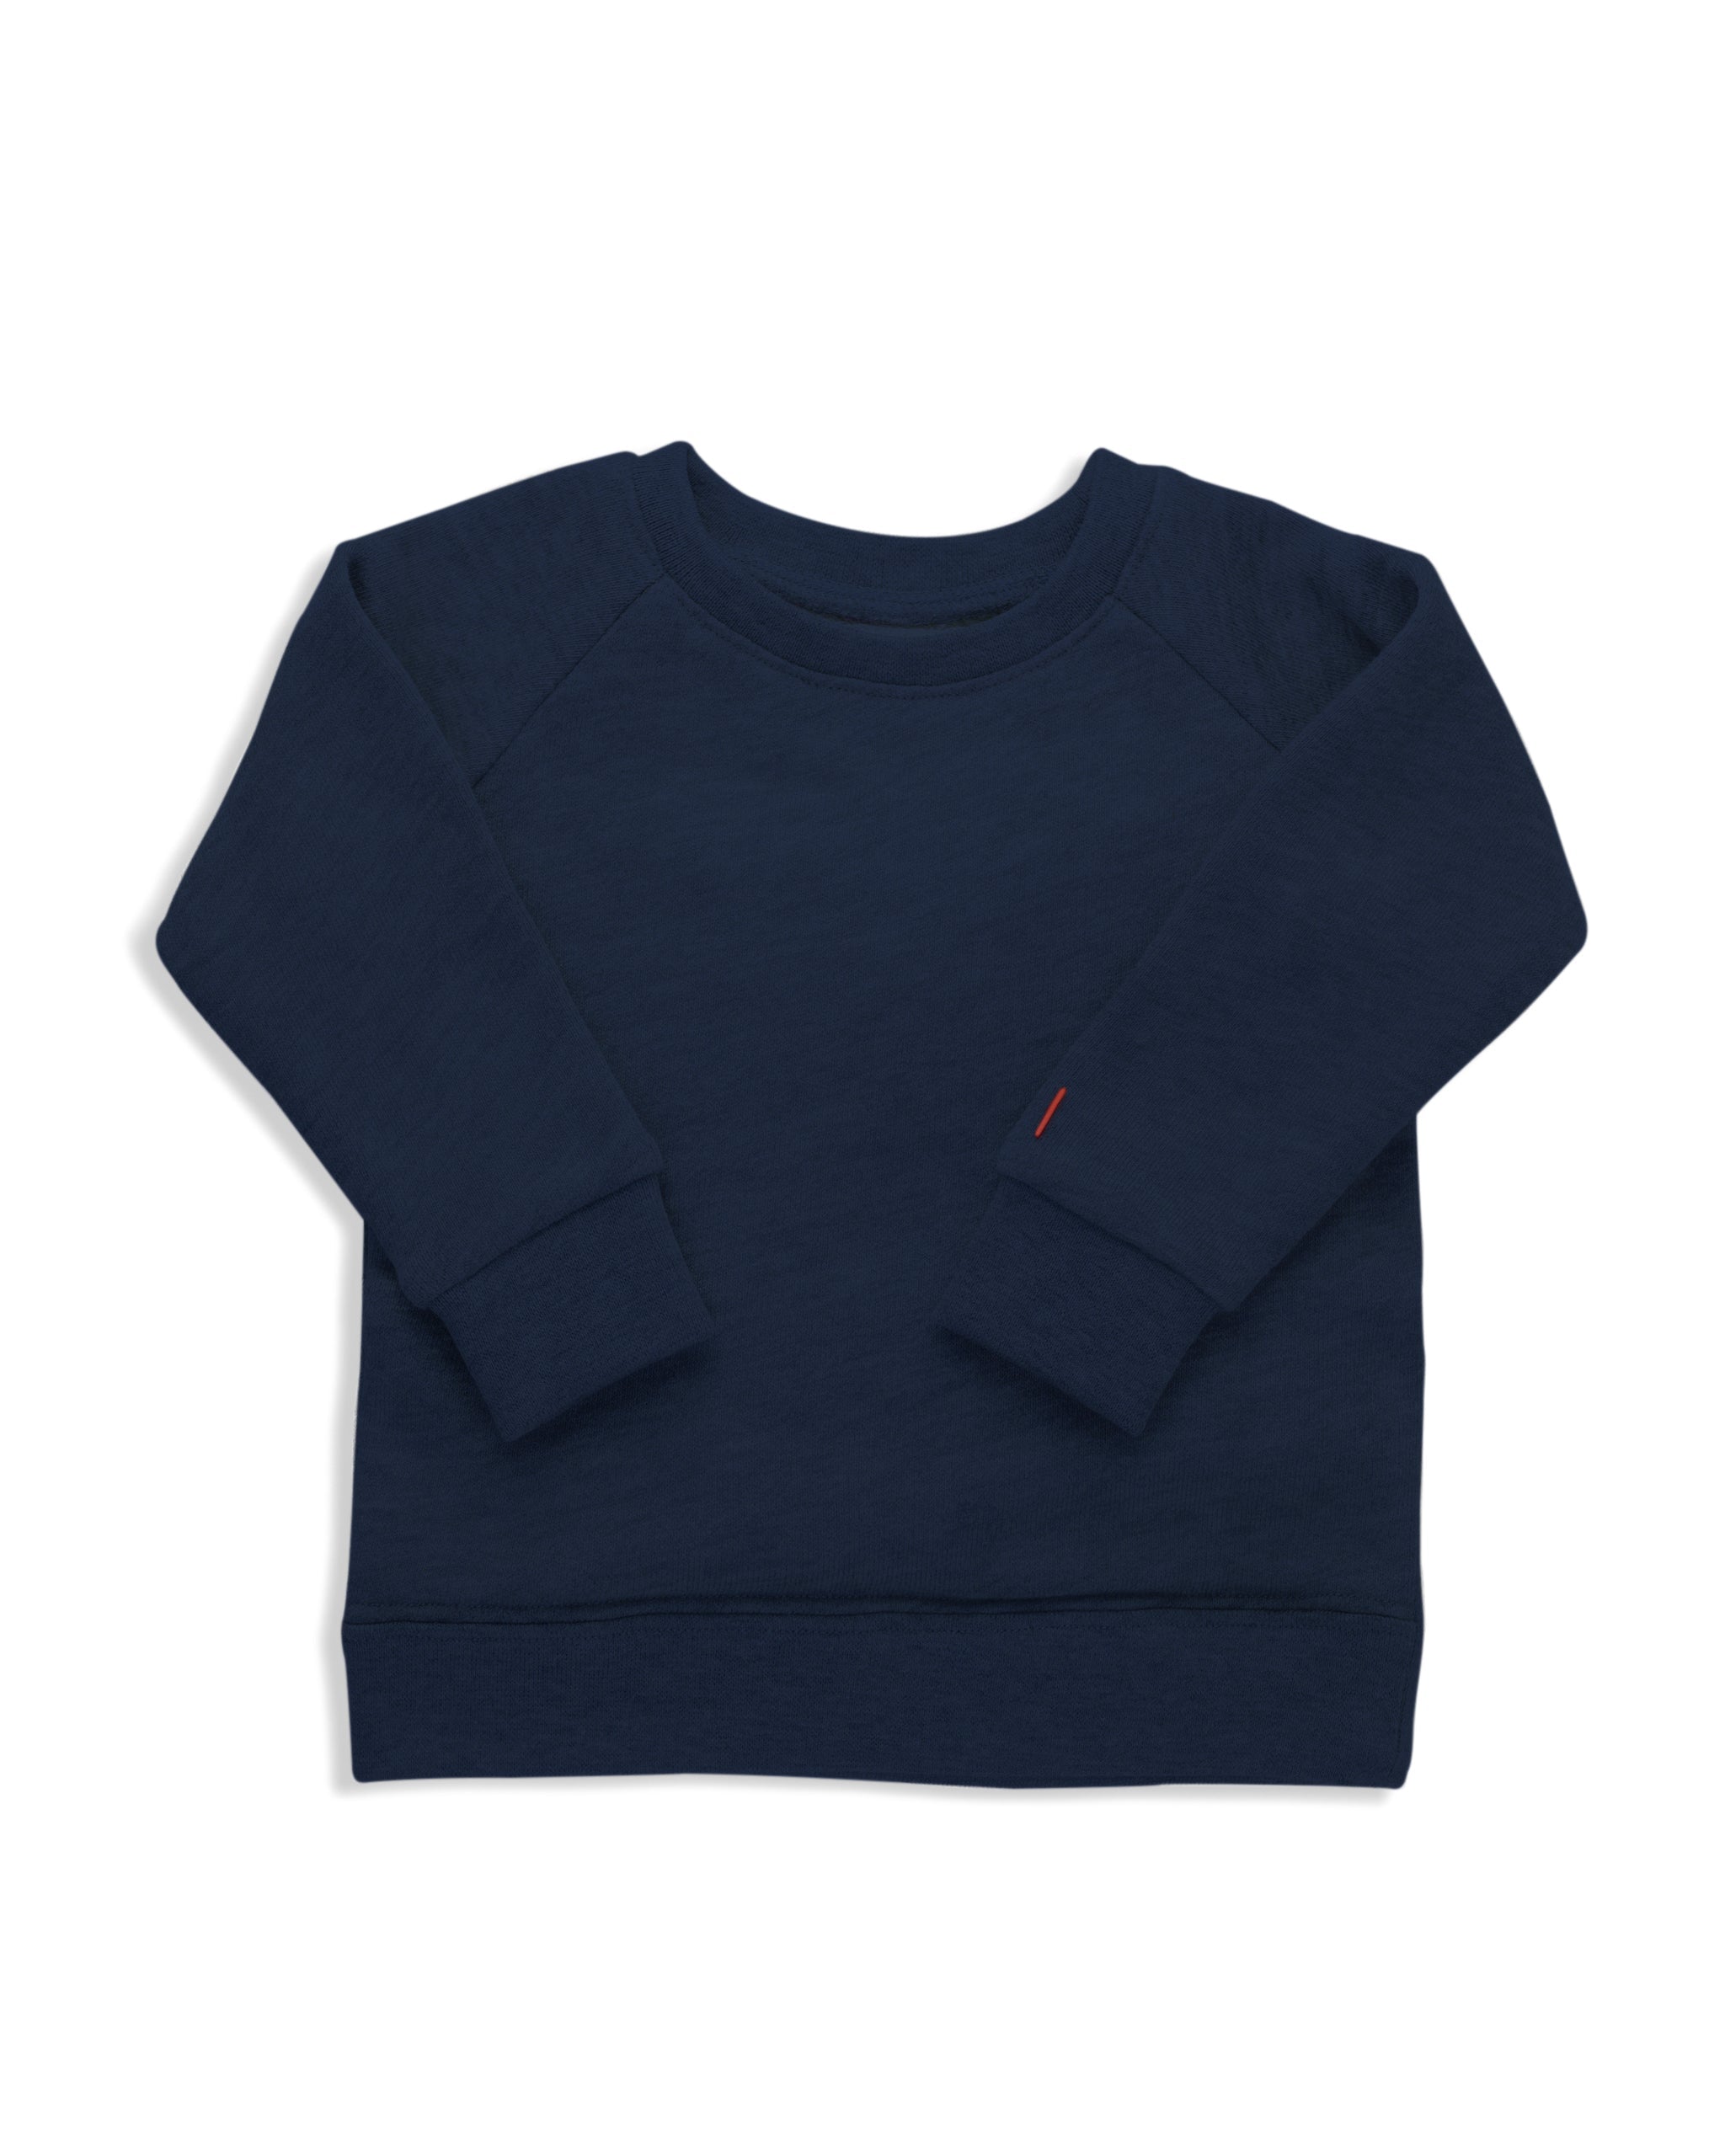 The Organic Pullover Sweatshirt #color_ Navy